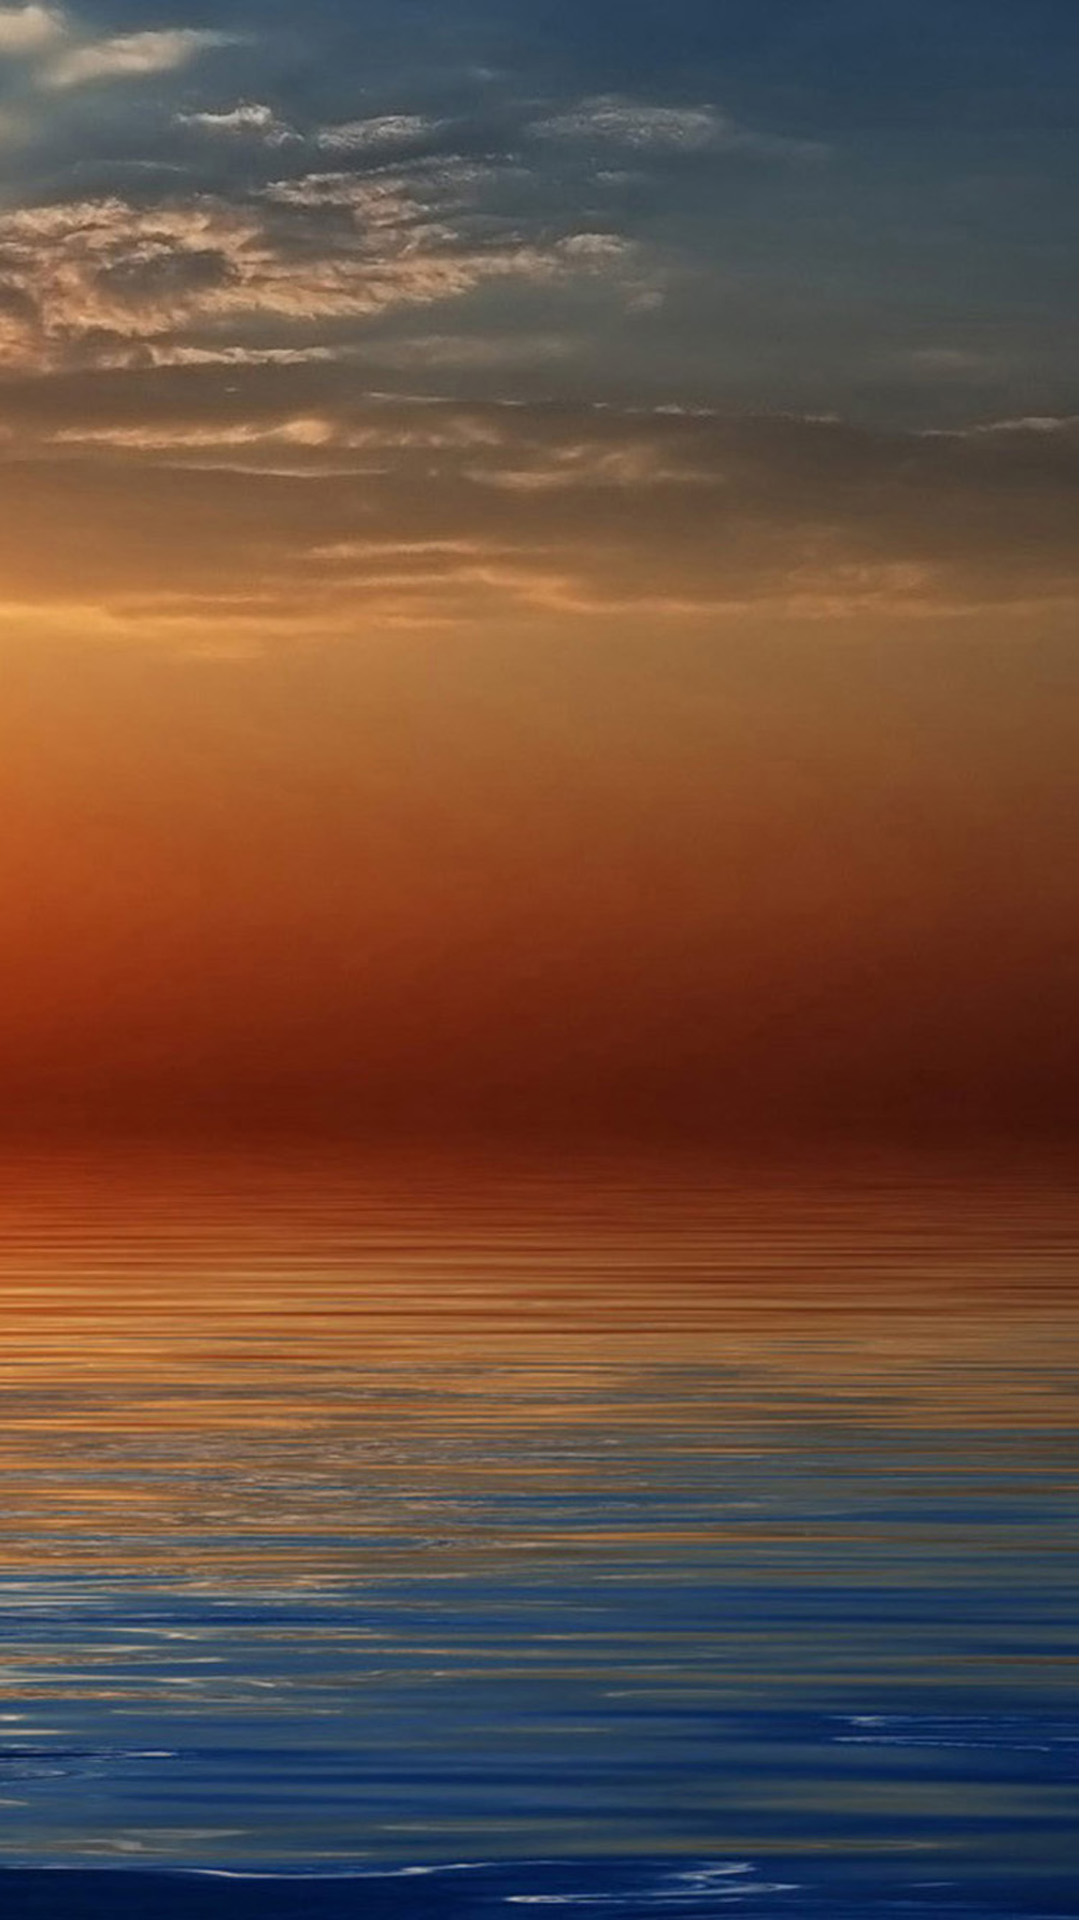 Beach Orange Sunset Android wallpaper